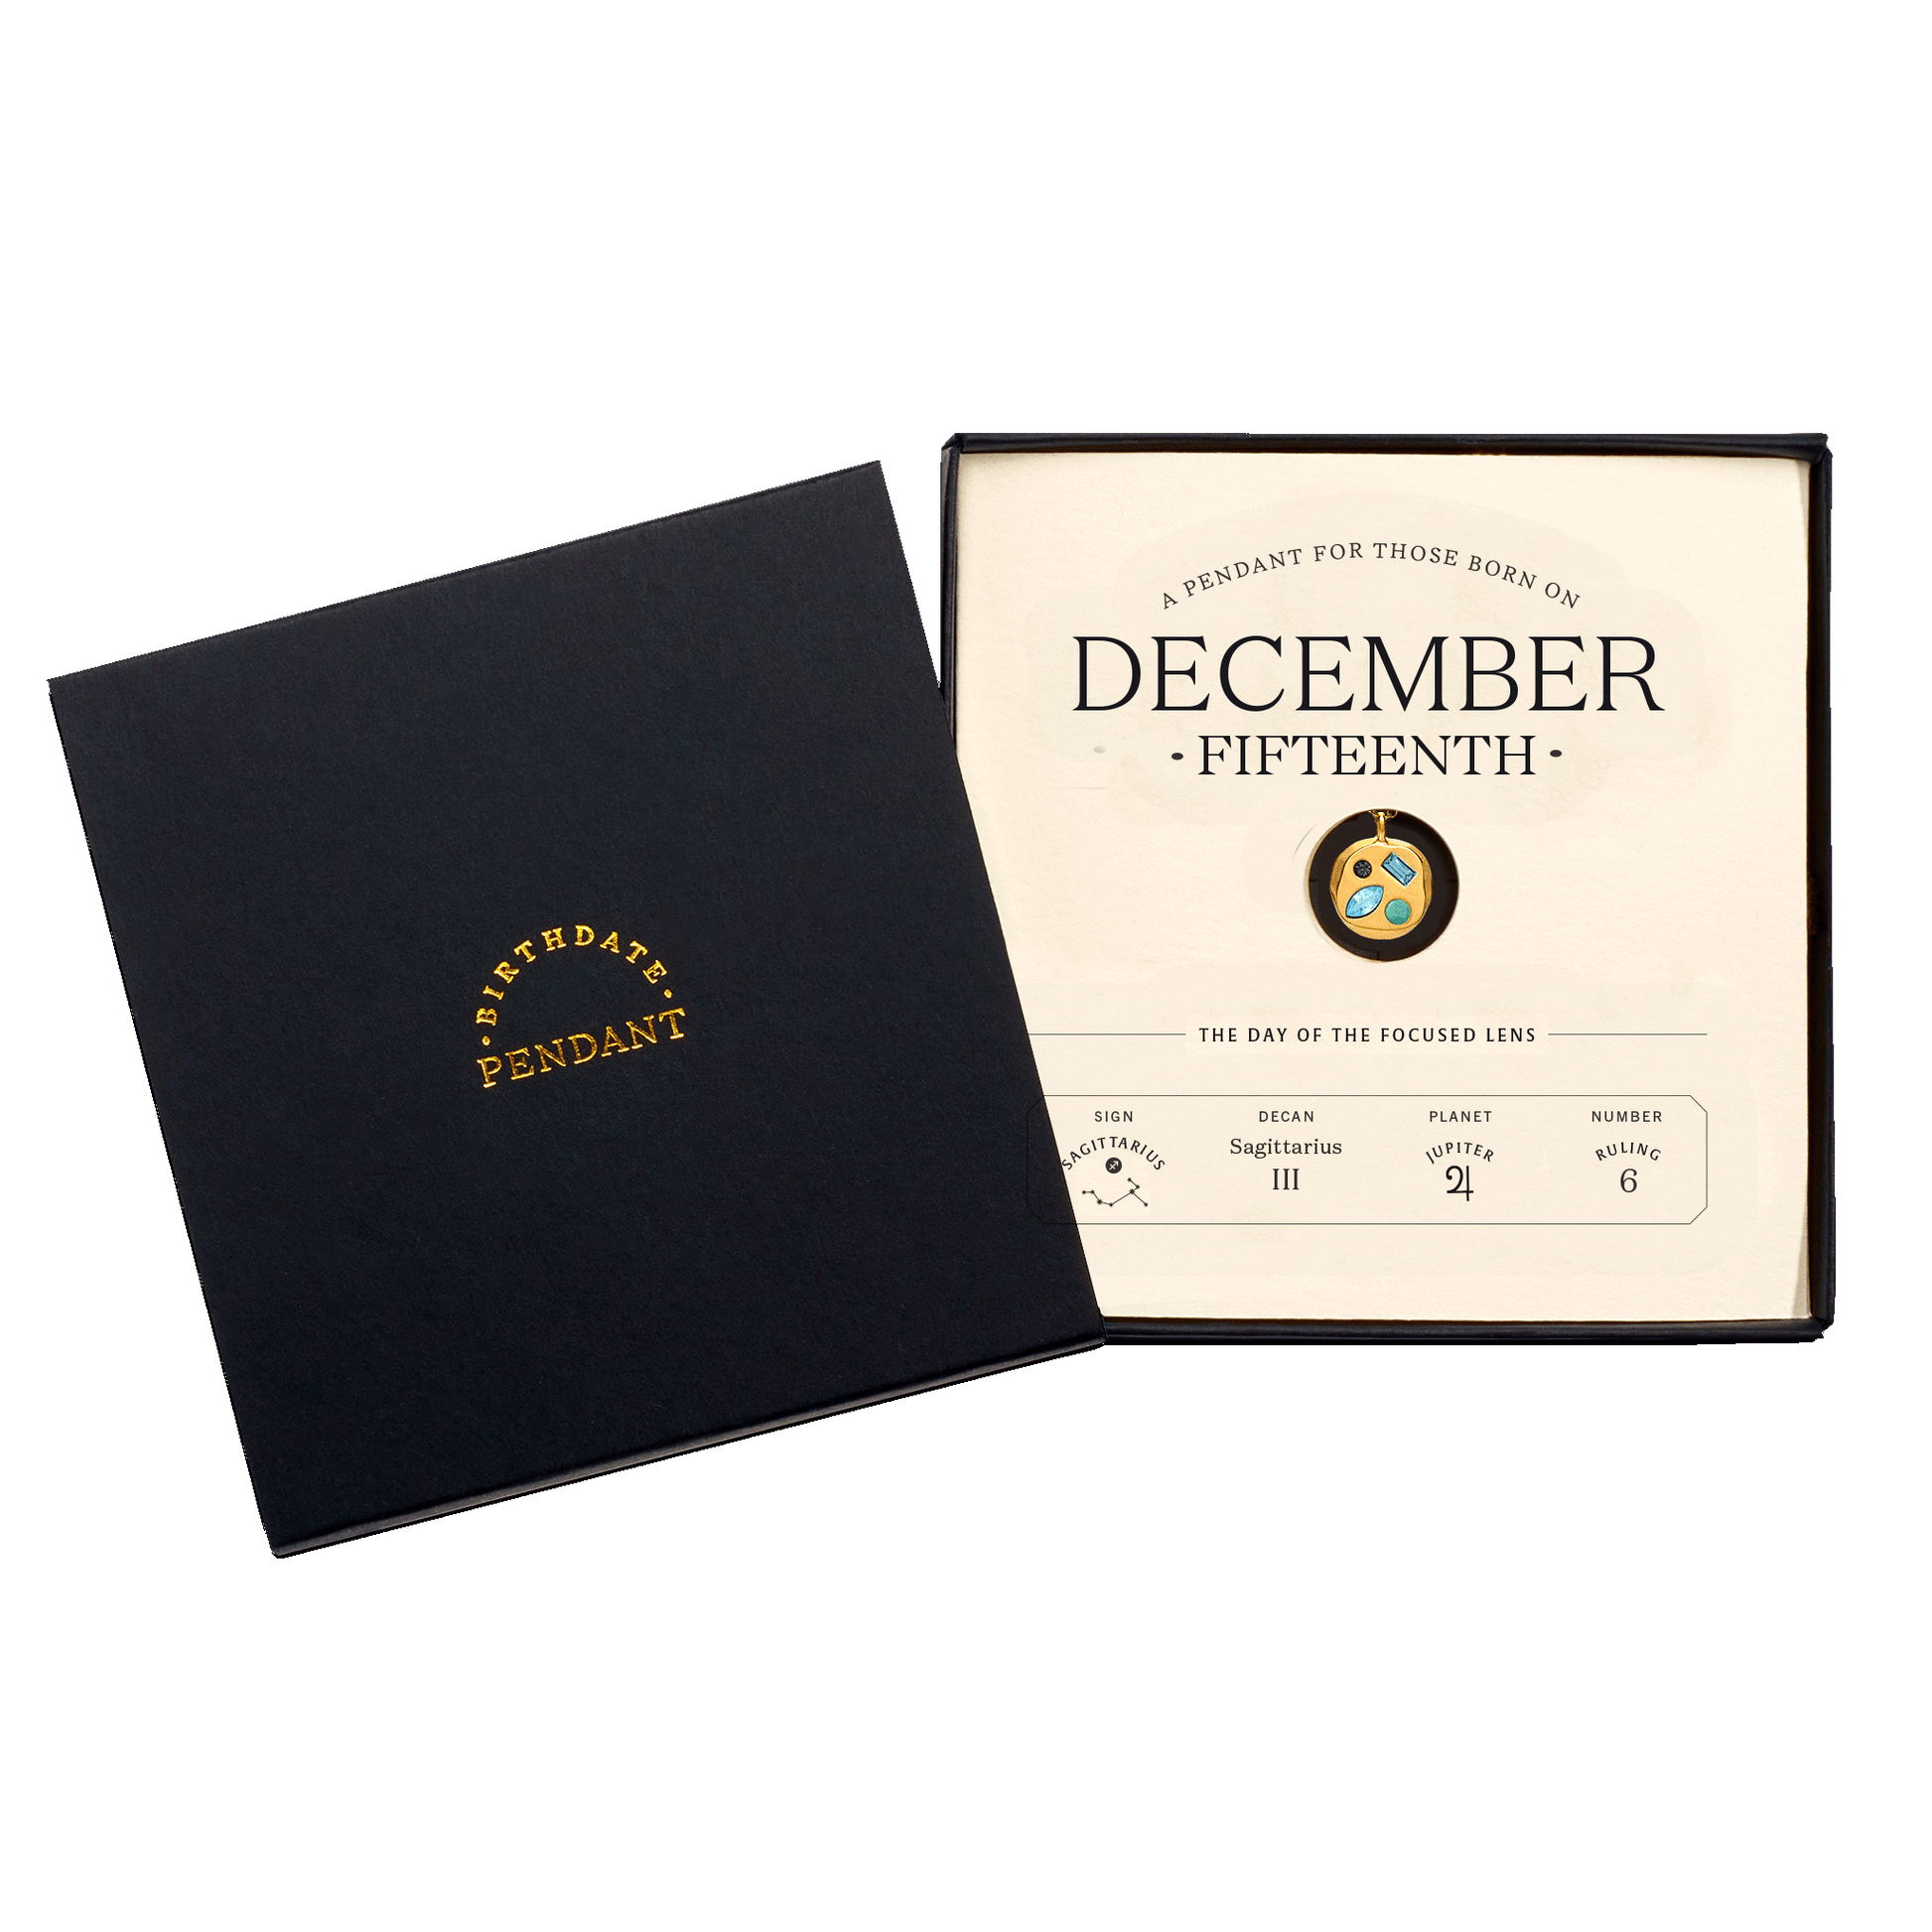 The December Fifteenth Pendant inside its box